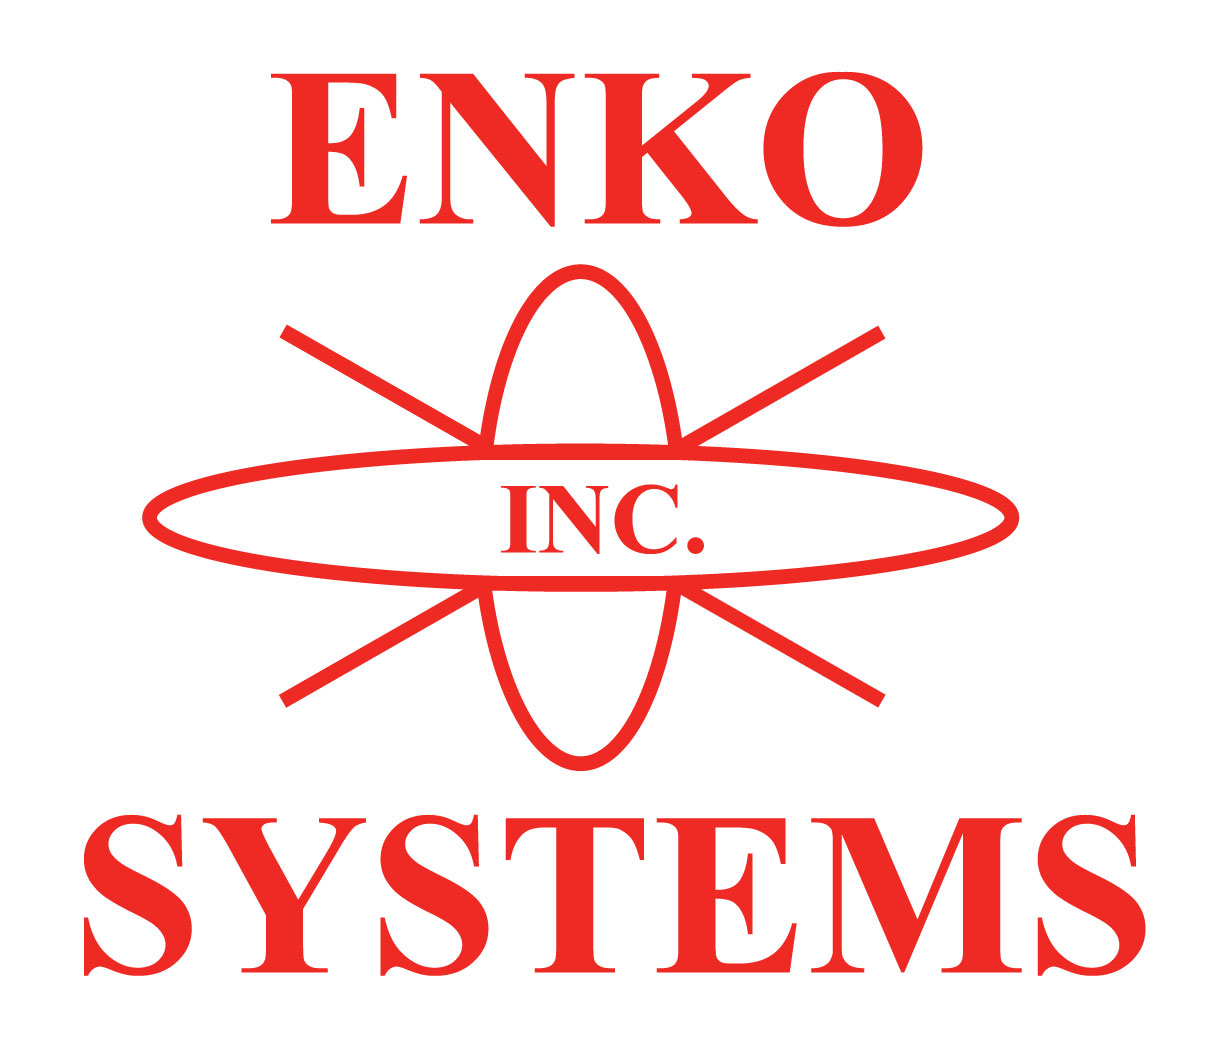 Enko Systems Inc